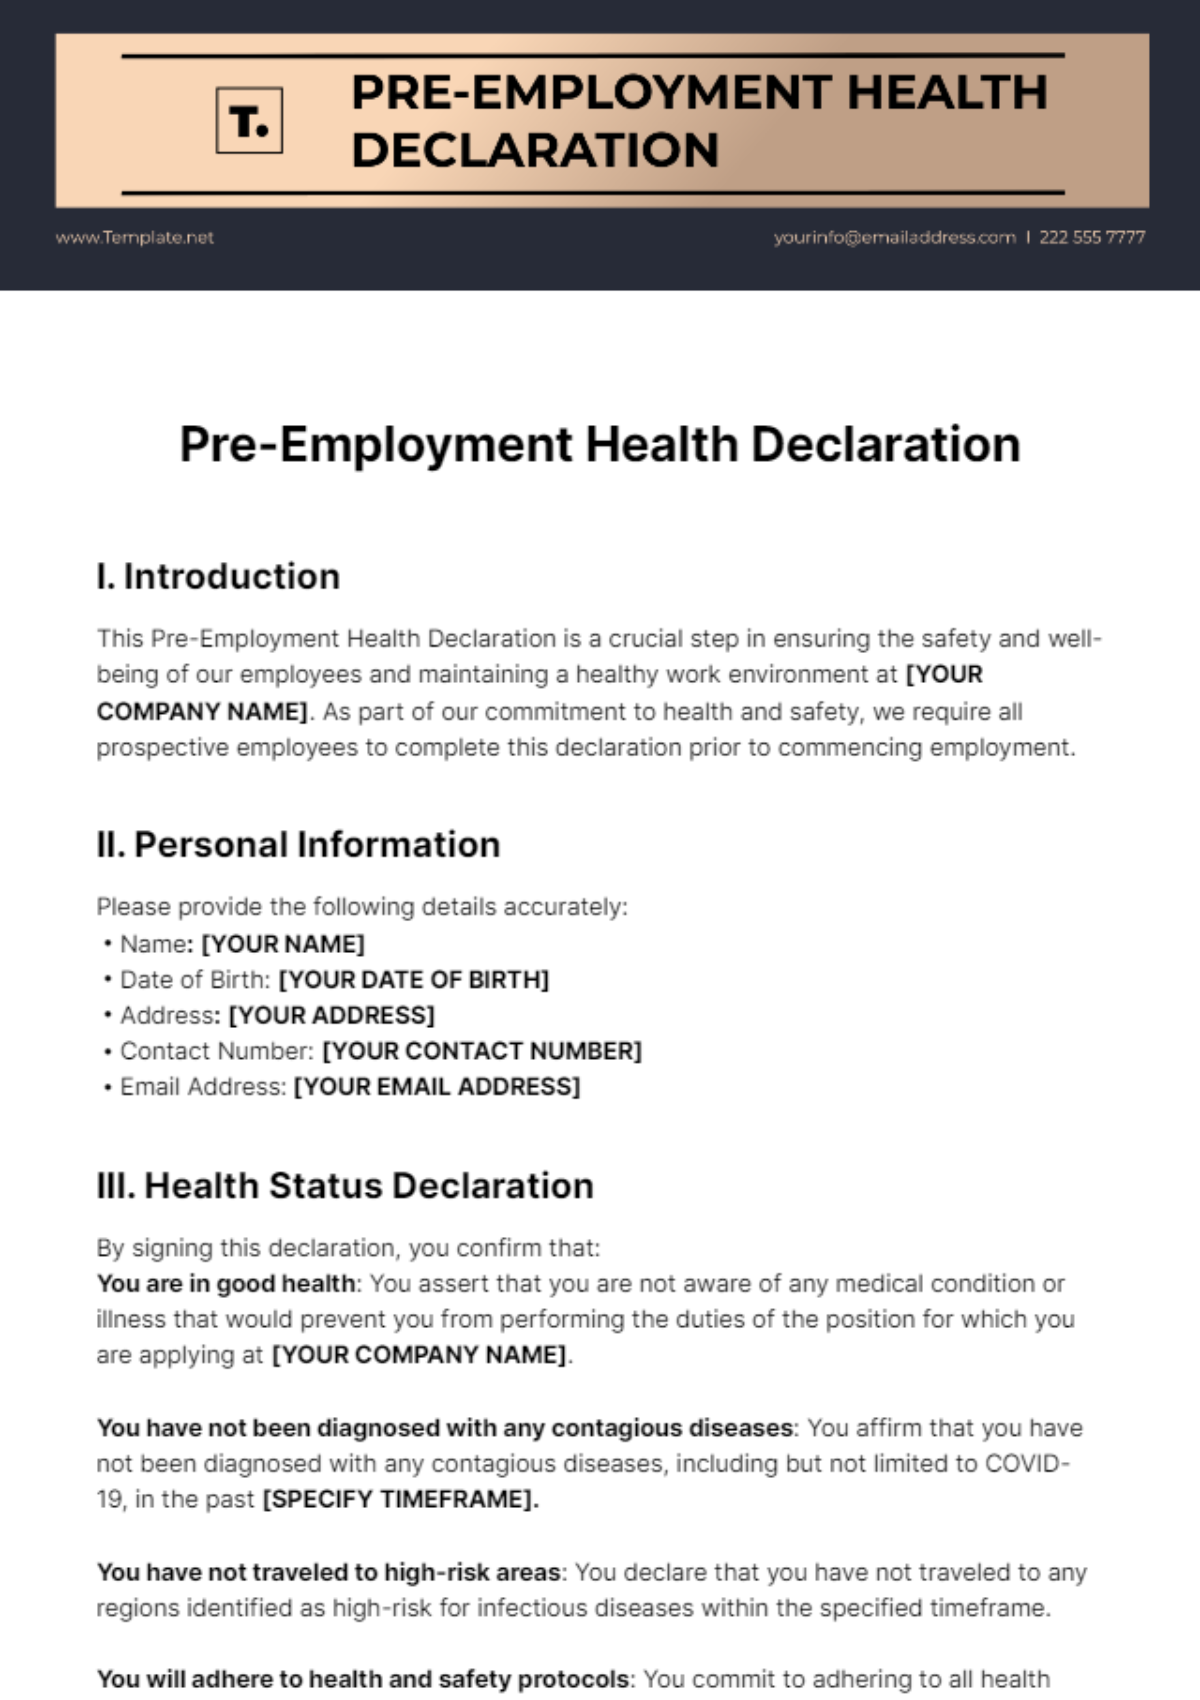 Pre-Employement Health Declaration Template